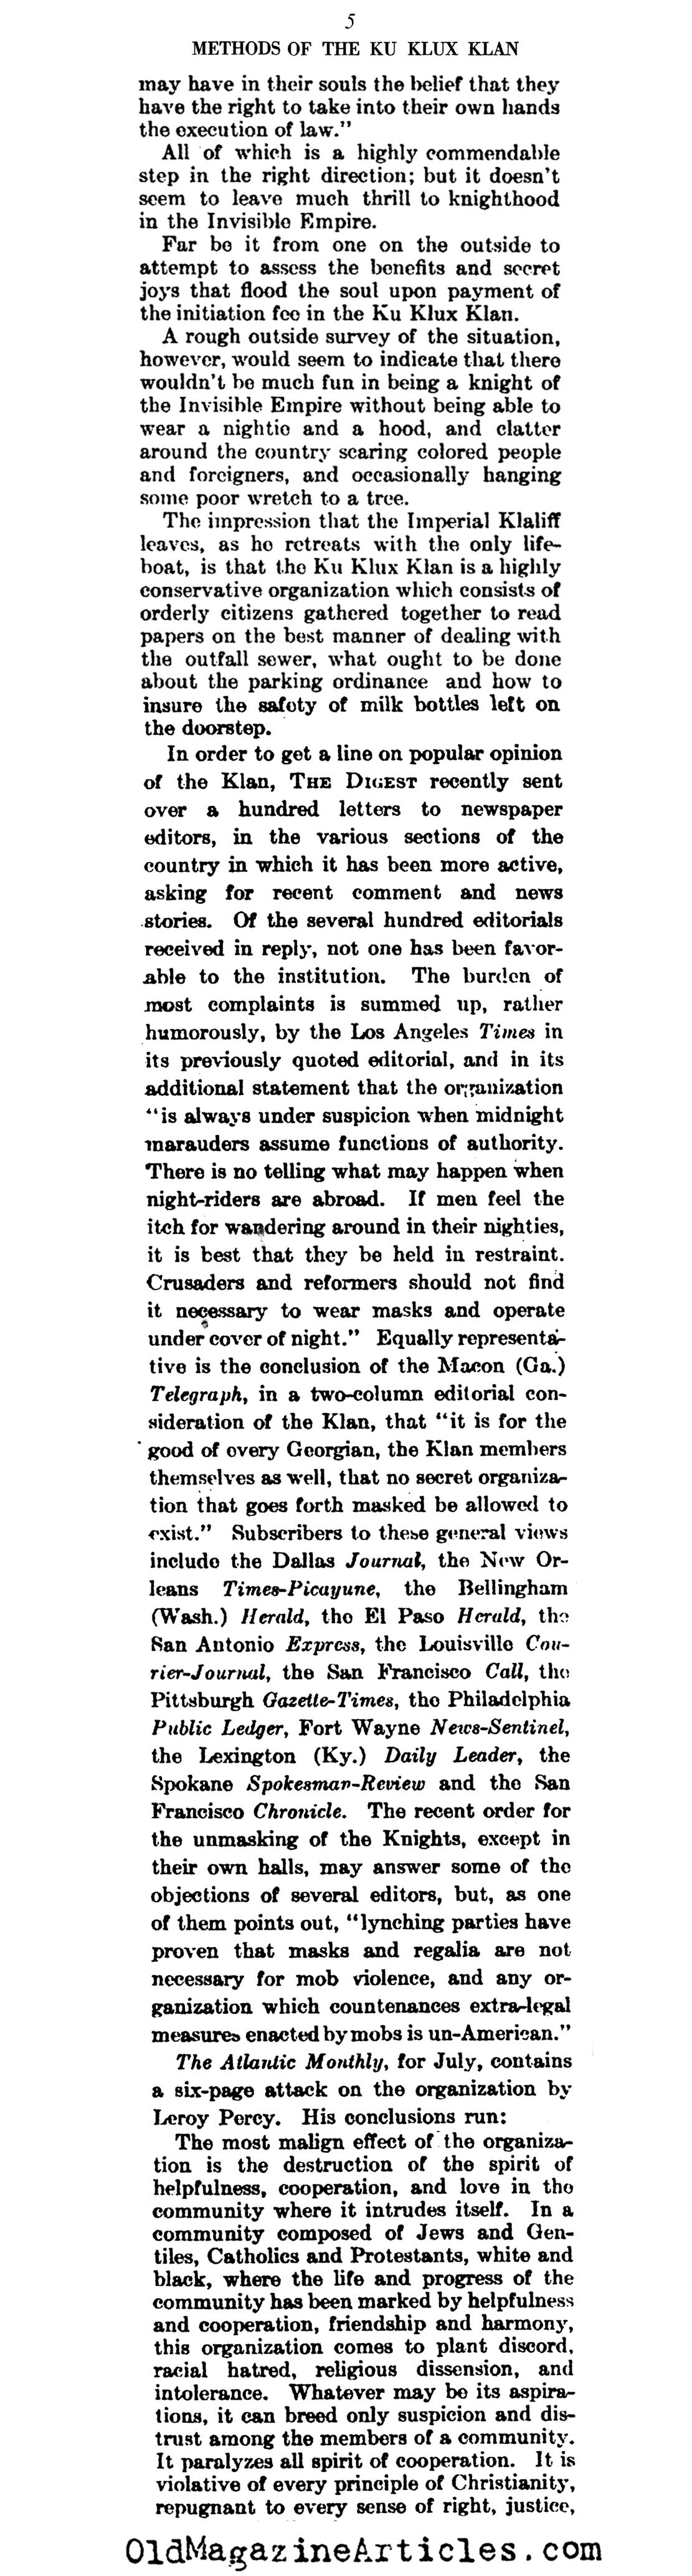 Klan Methods and Customs (Literary Digest, 1922)